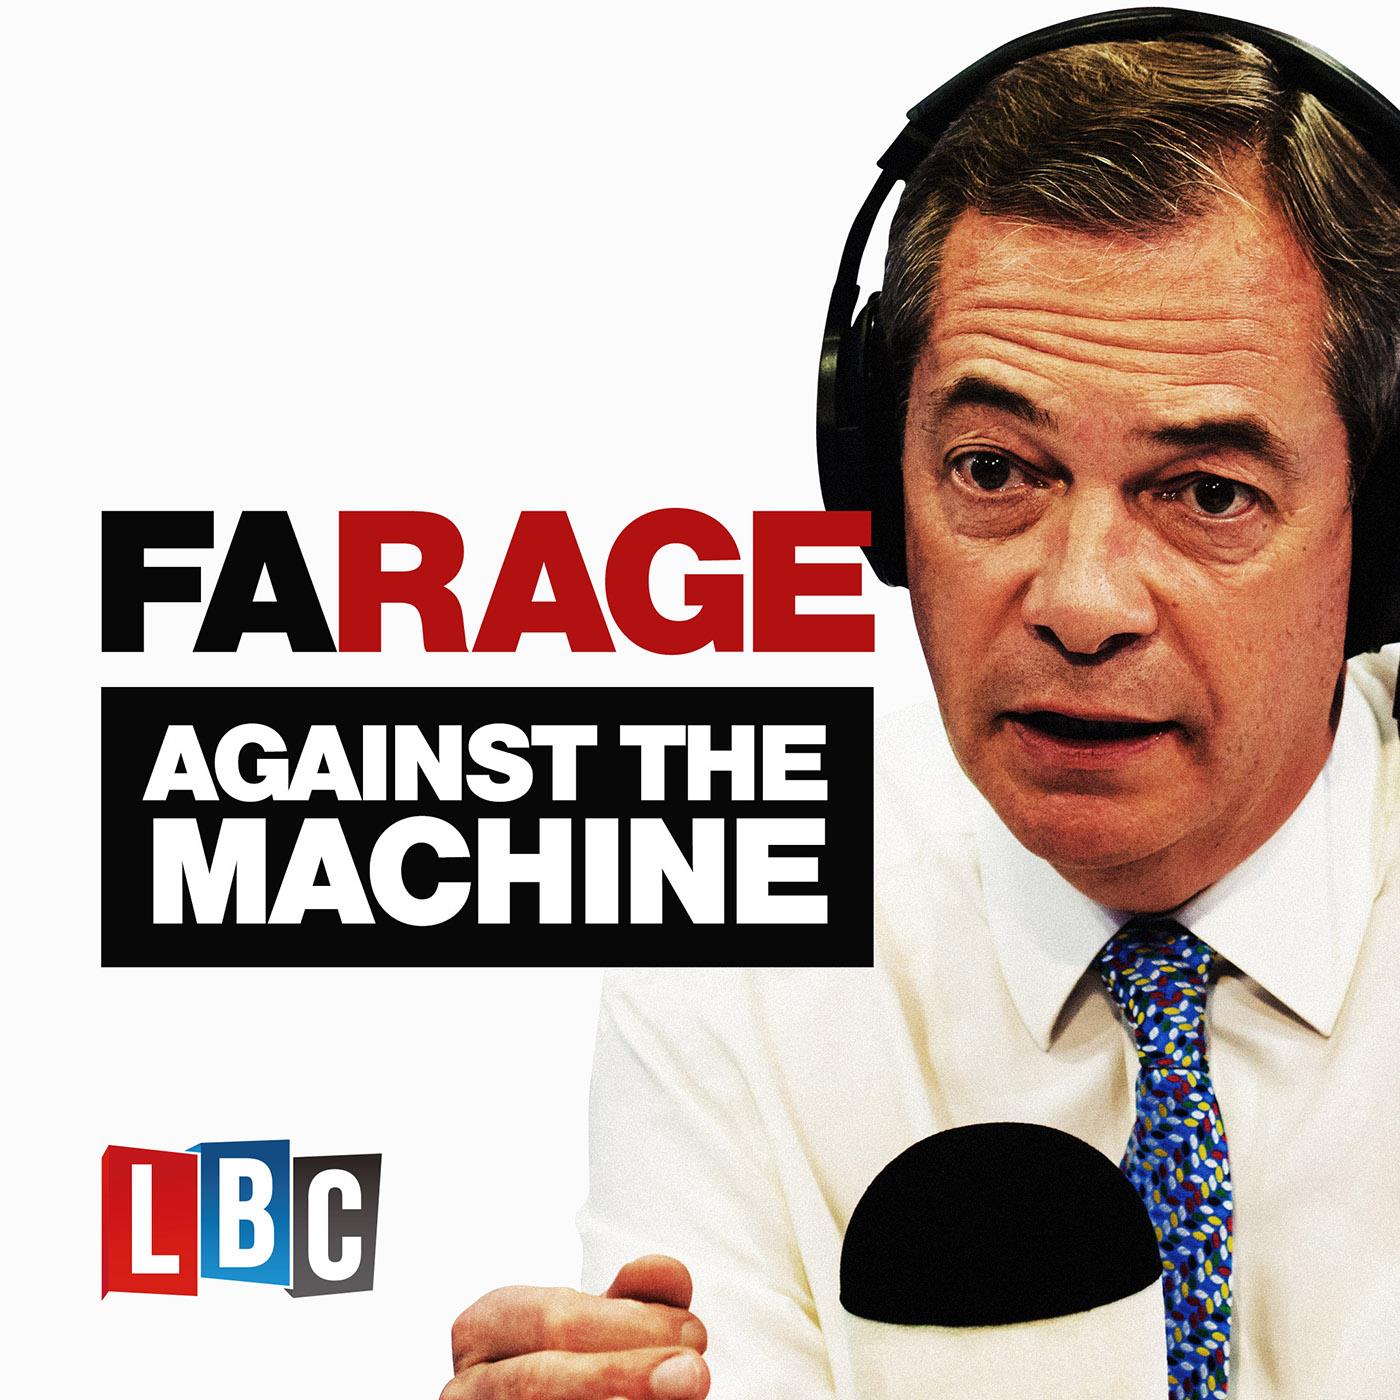 Farage versus Clegg - The Rematch